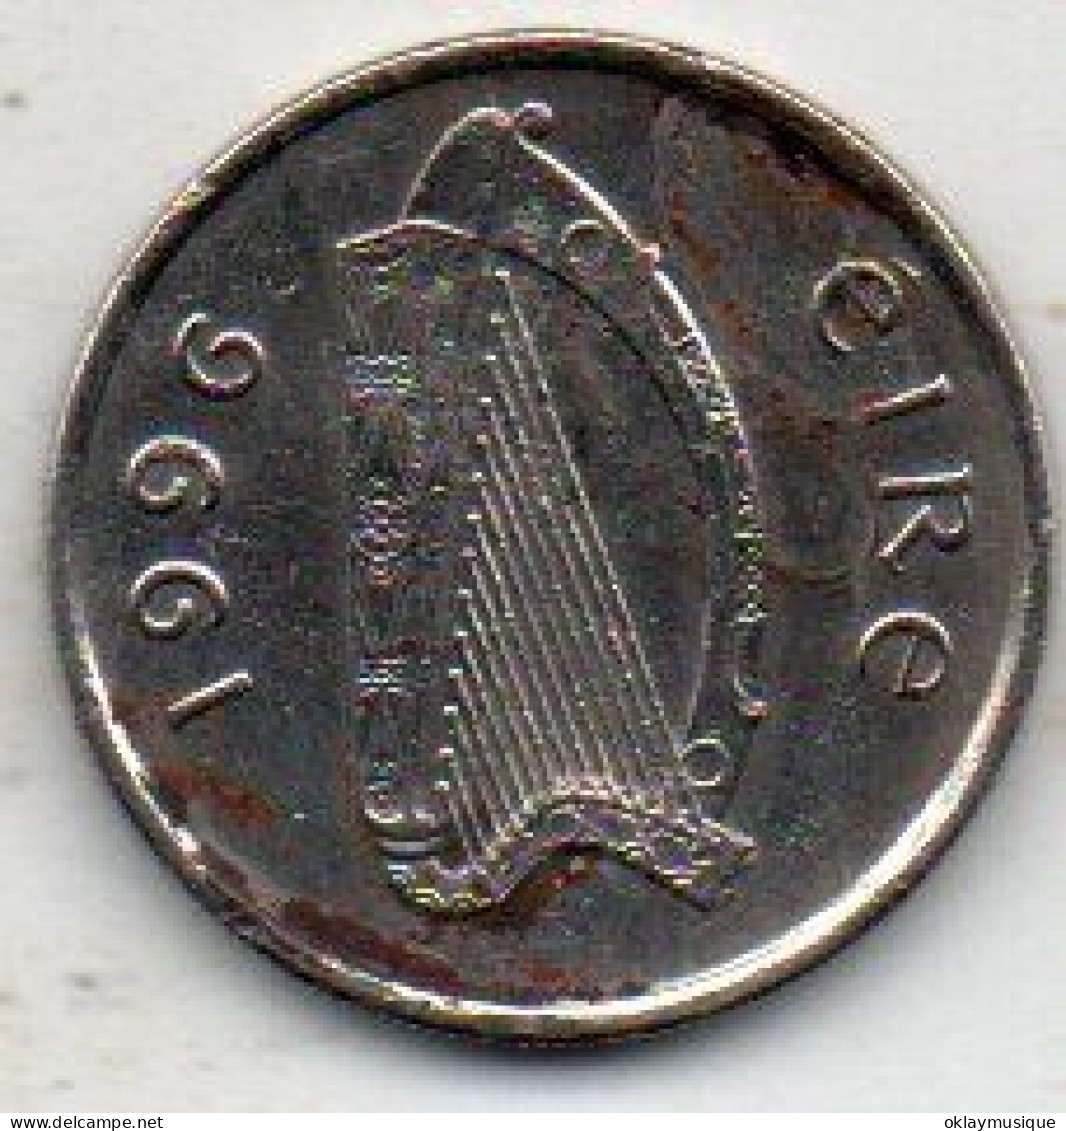 5 Penny 1996 - Irland